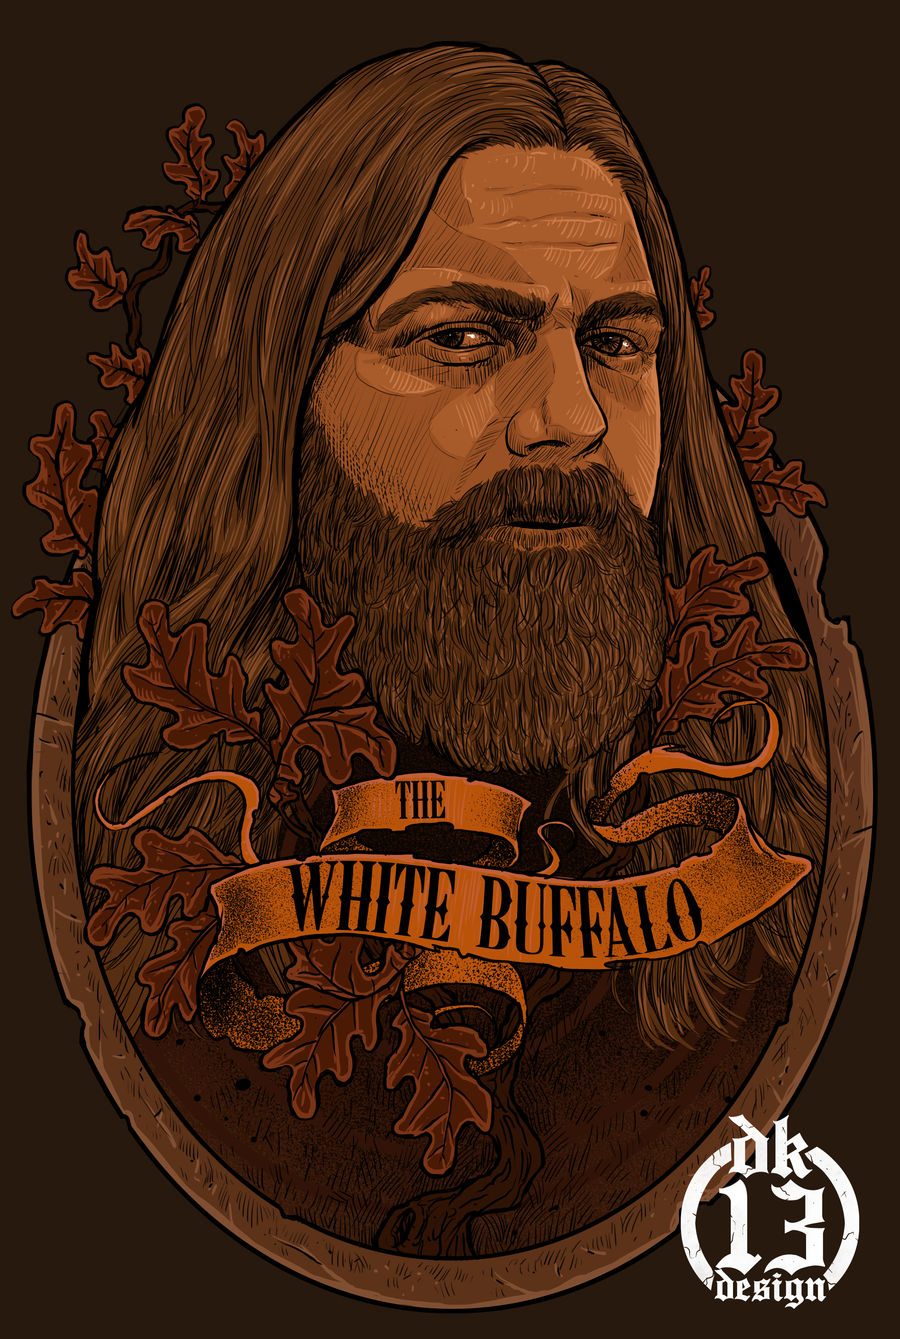 næve Resignation Begrænse The White Buffalo tour poster by DK13Design on DeviantArt